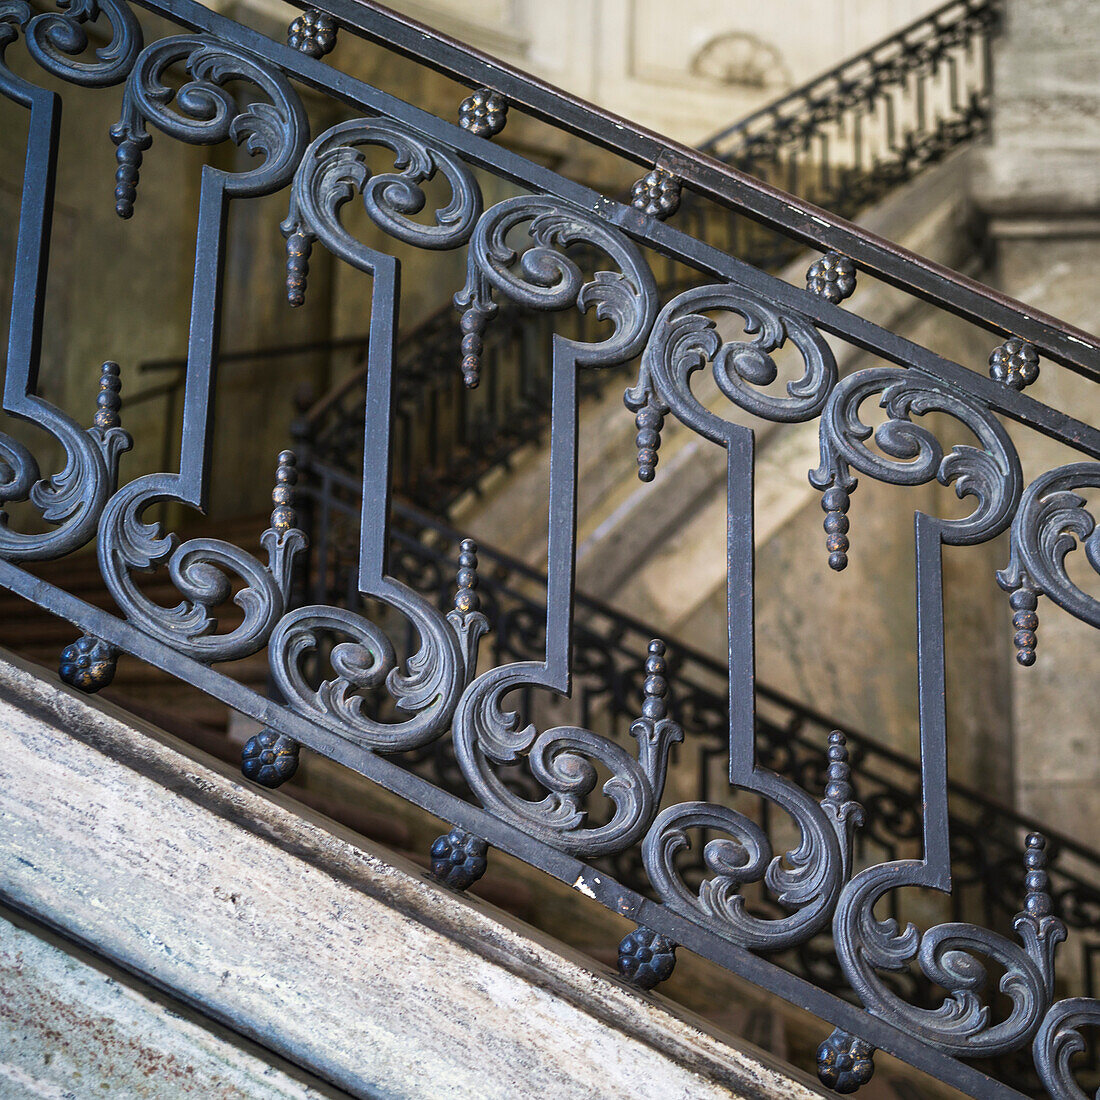 Ornate metal railing along stairs, Stockholm, Sweden